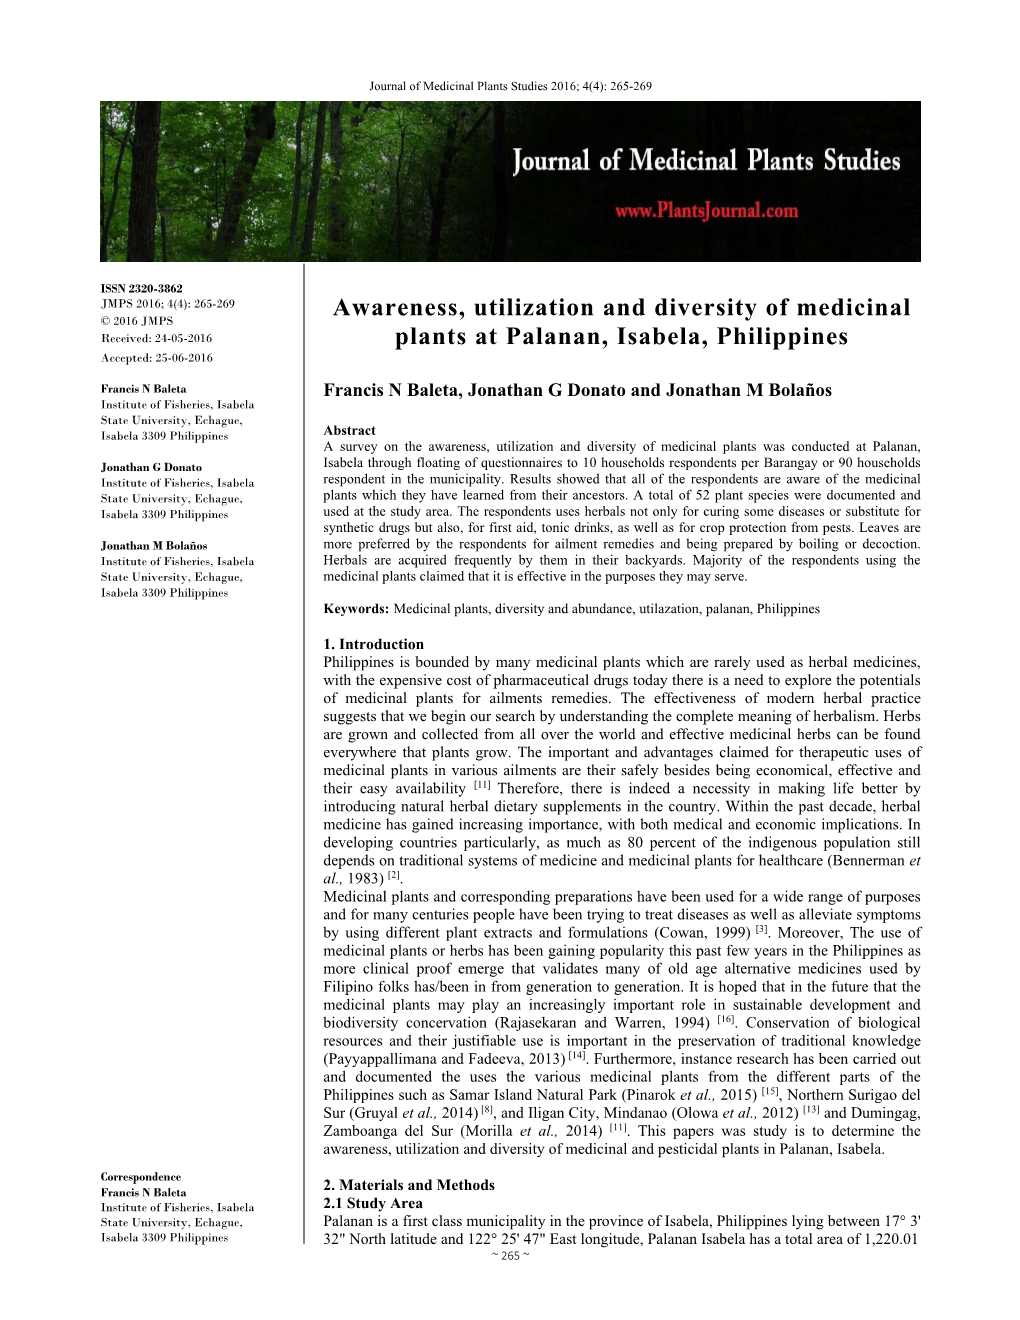 Awareness, Utilization and Diversity of Medicinal Plants at Palanan, Isabela, Philippines